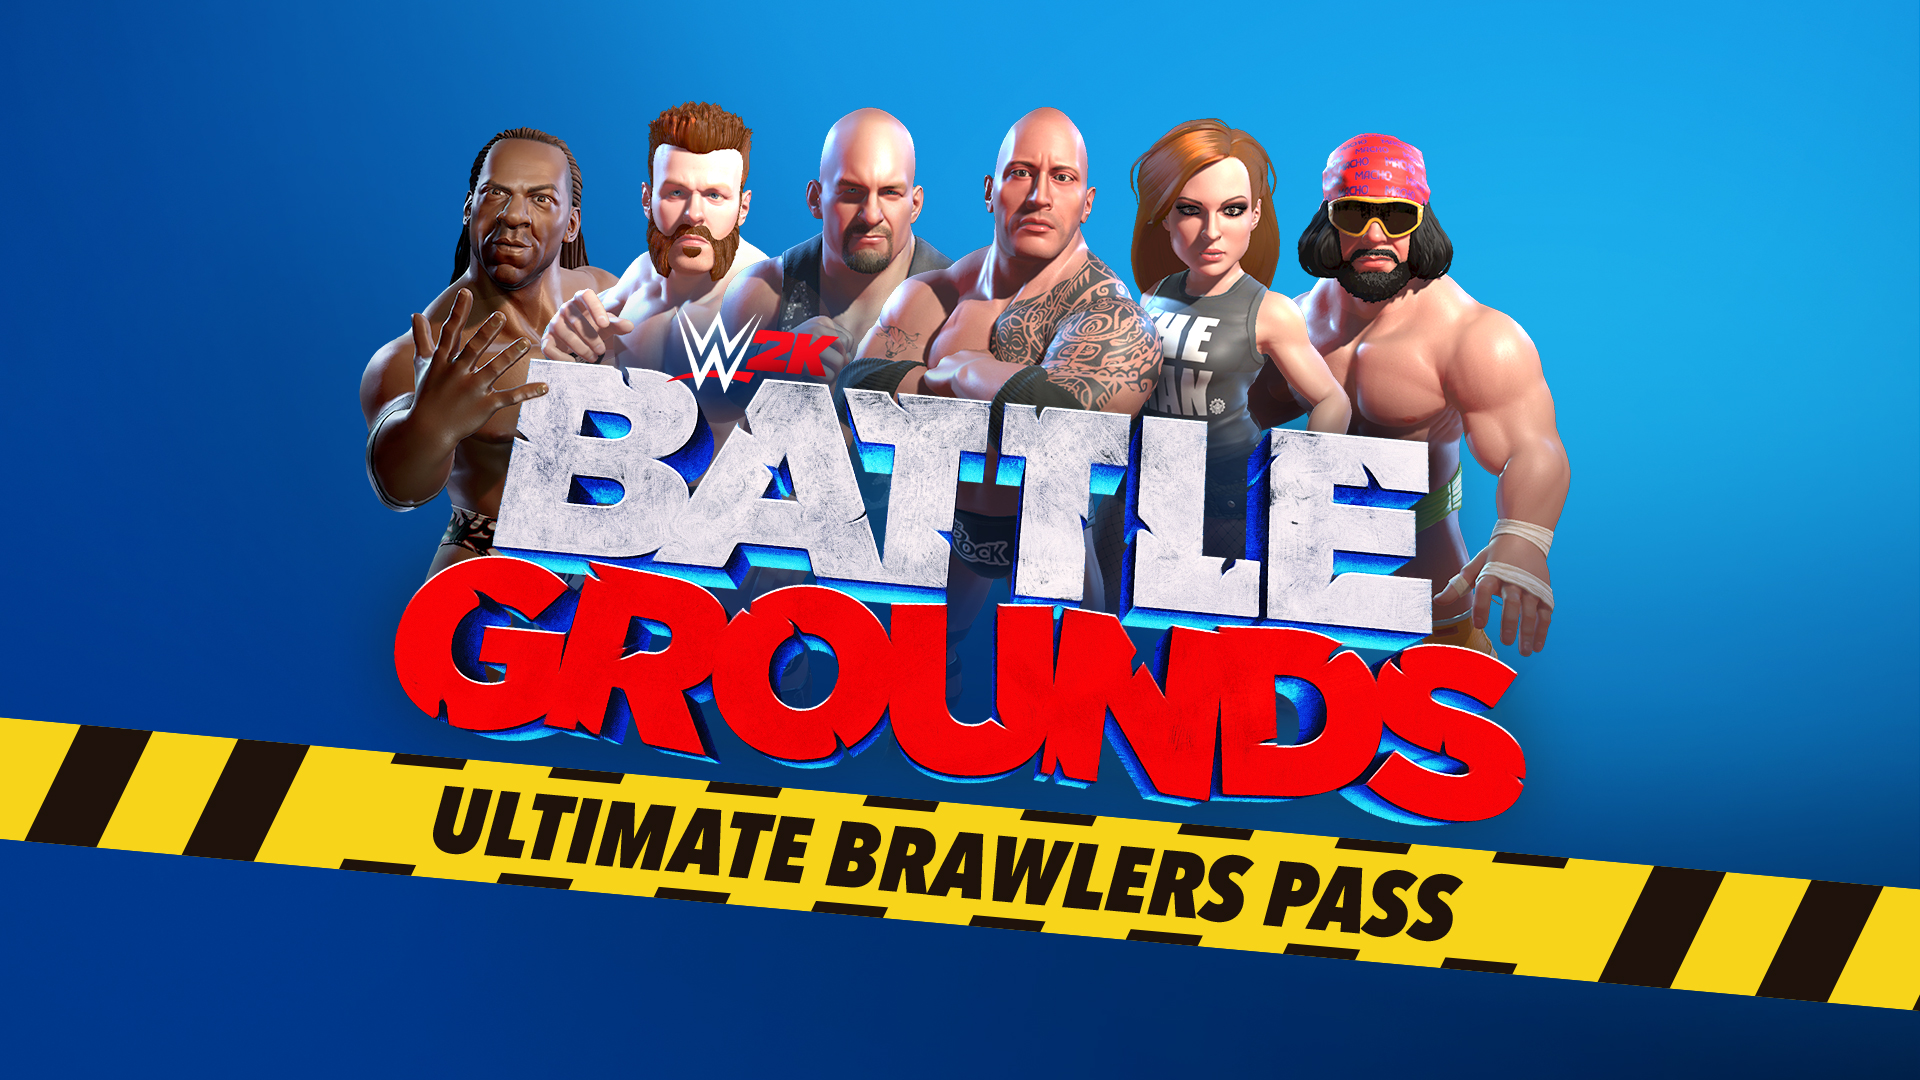 wwe 2k battlegrounds ultimate brawlers pass list